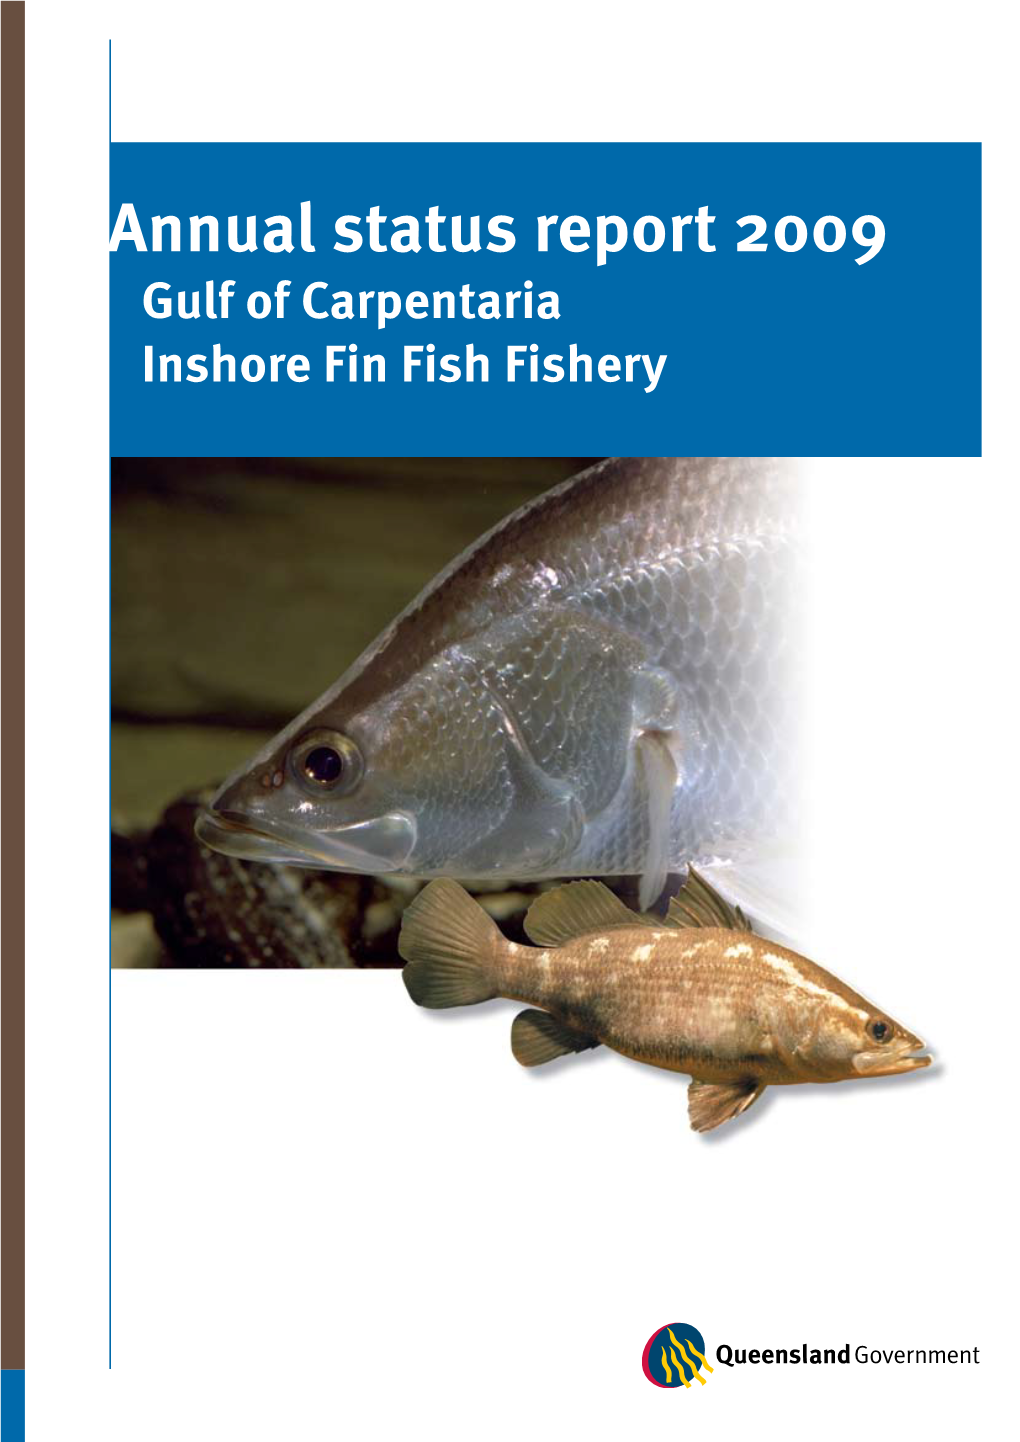 Annual Status Report 2009 Gulf of Carpentaria Inshore Fin Fish Fishery